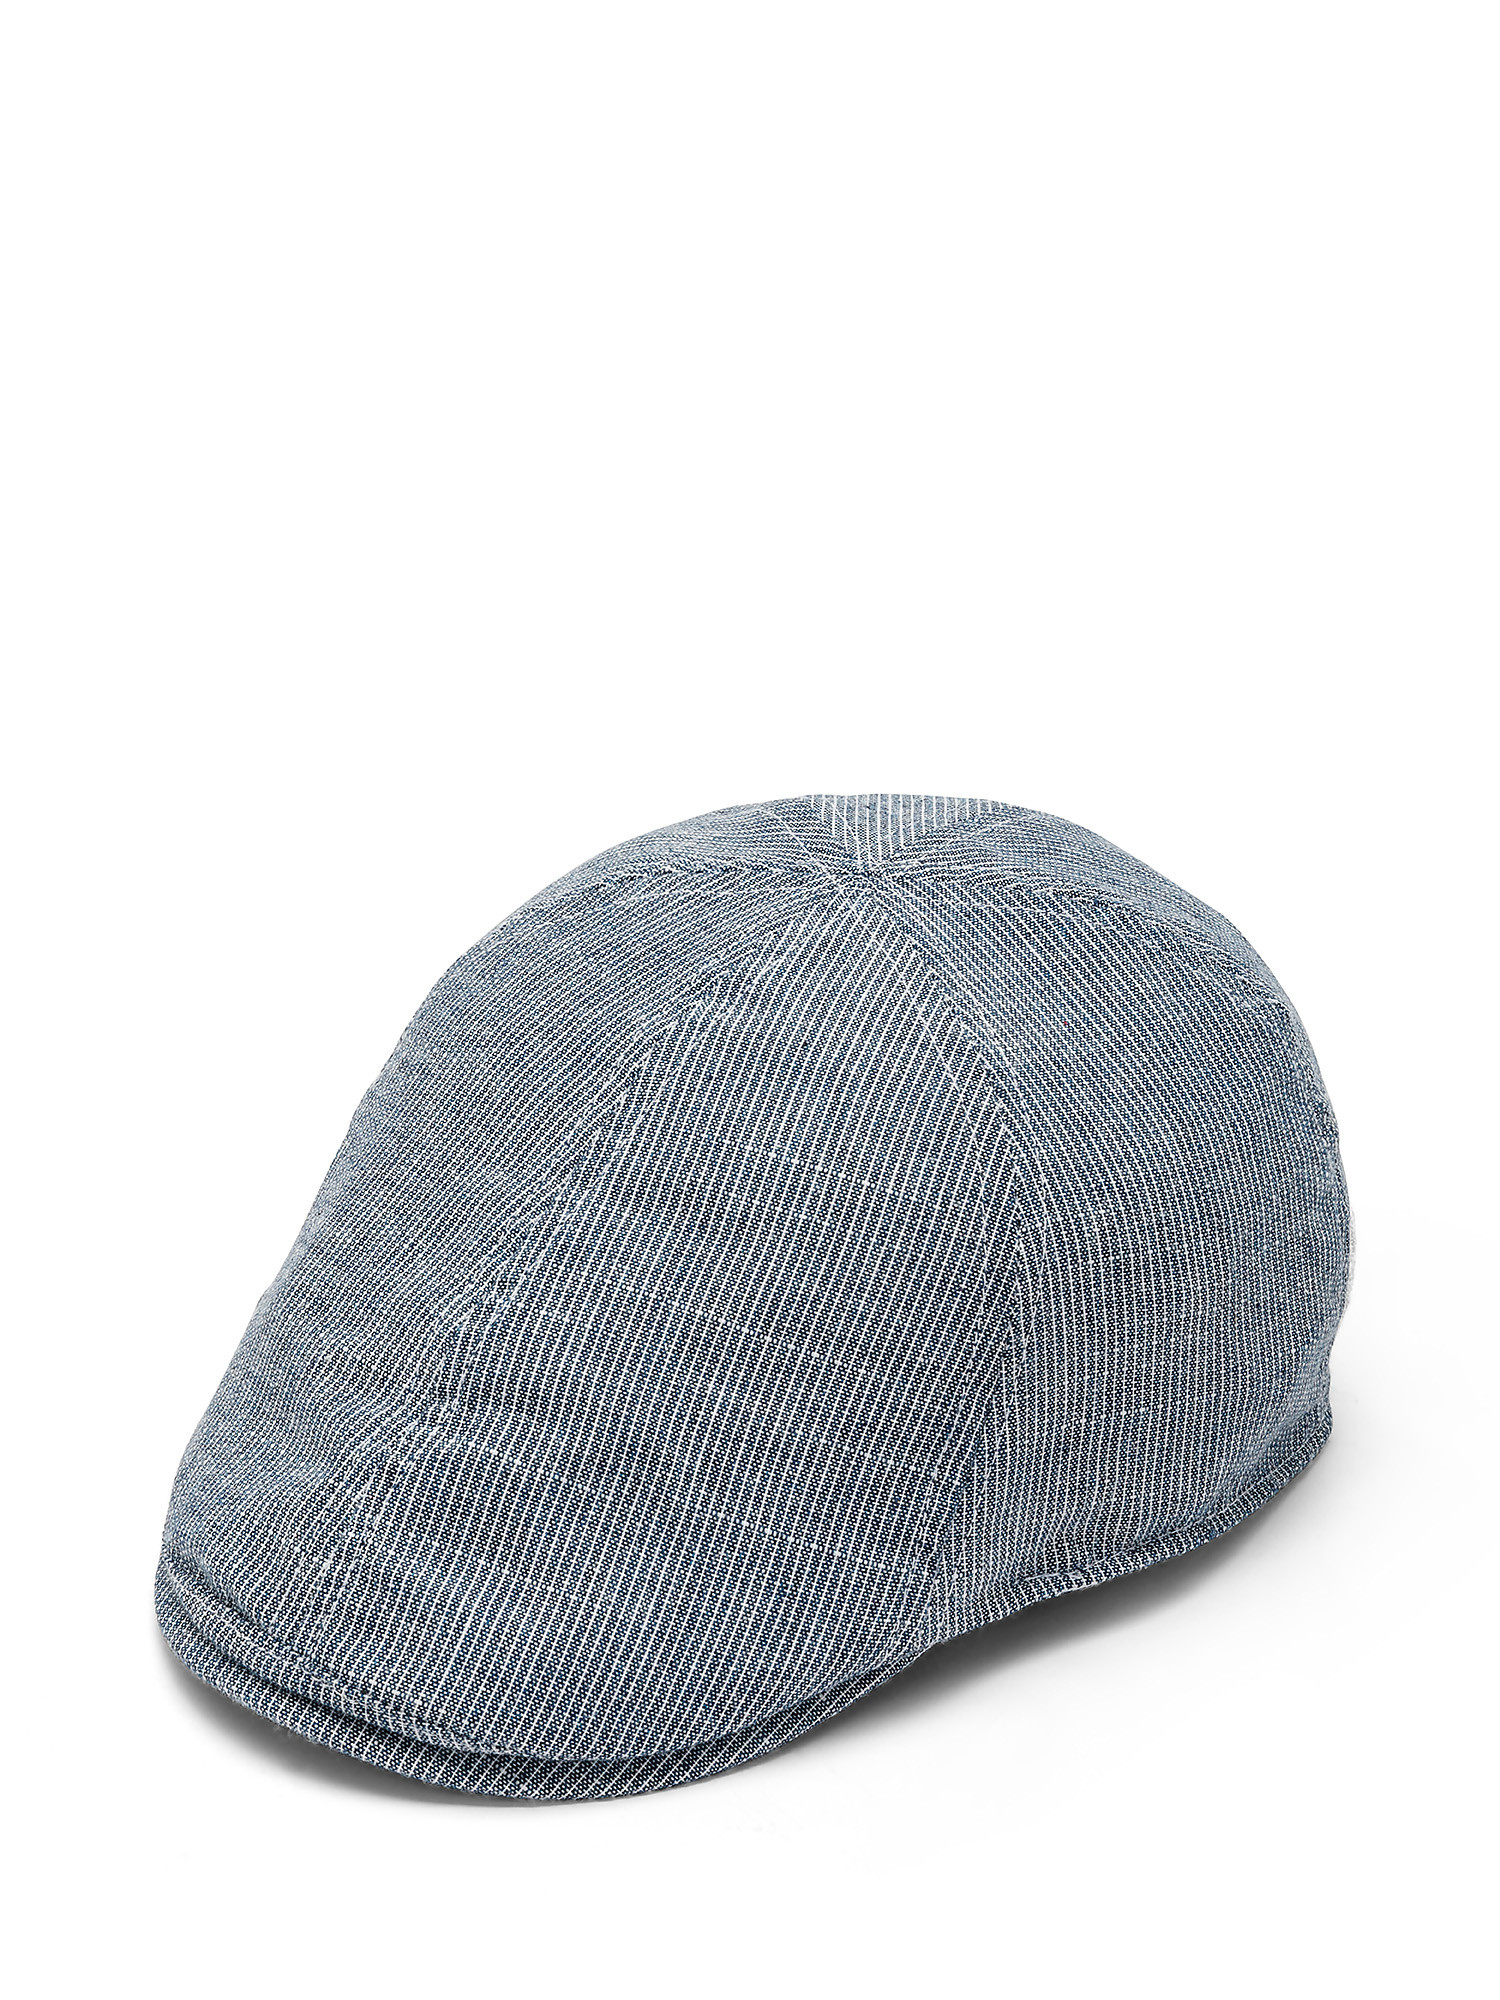 Striped flat cap, Dark Blue, large image number 0